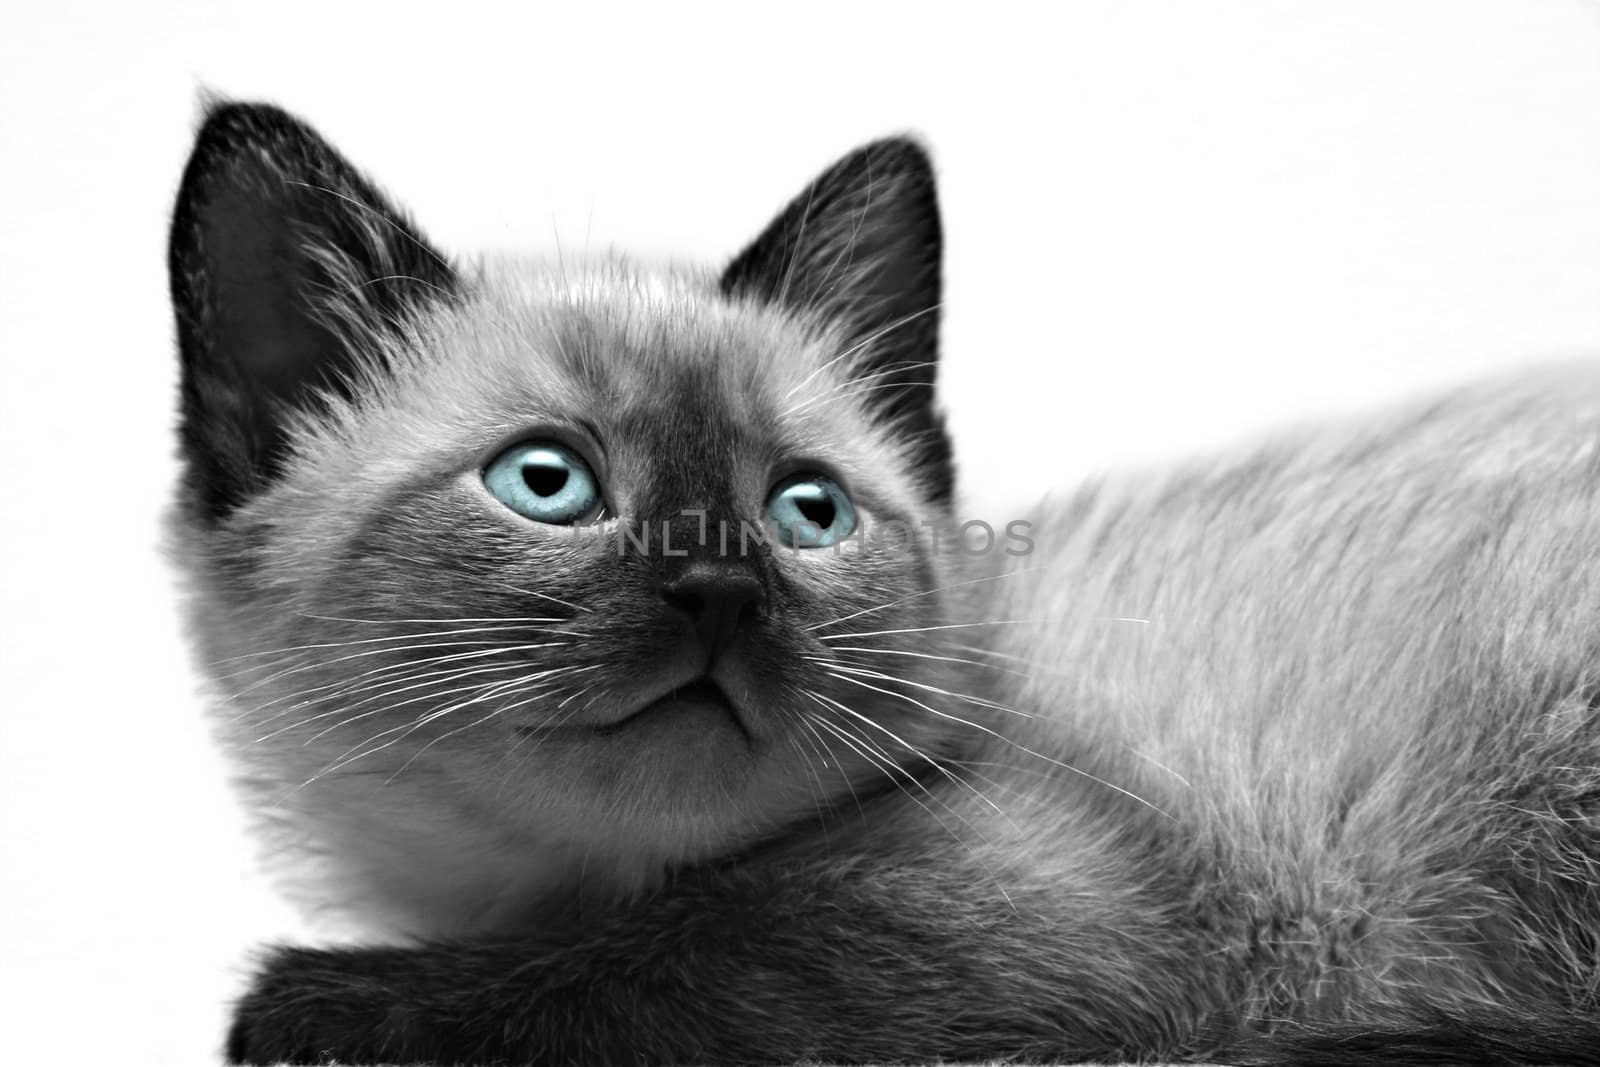 Kitten Close-up by ajn